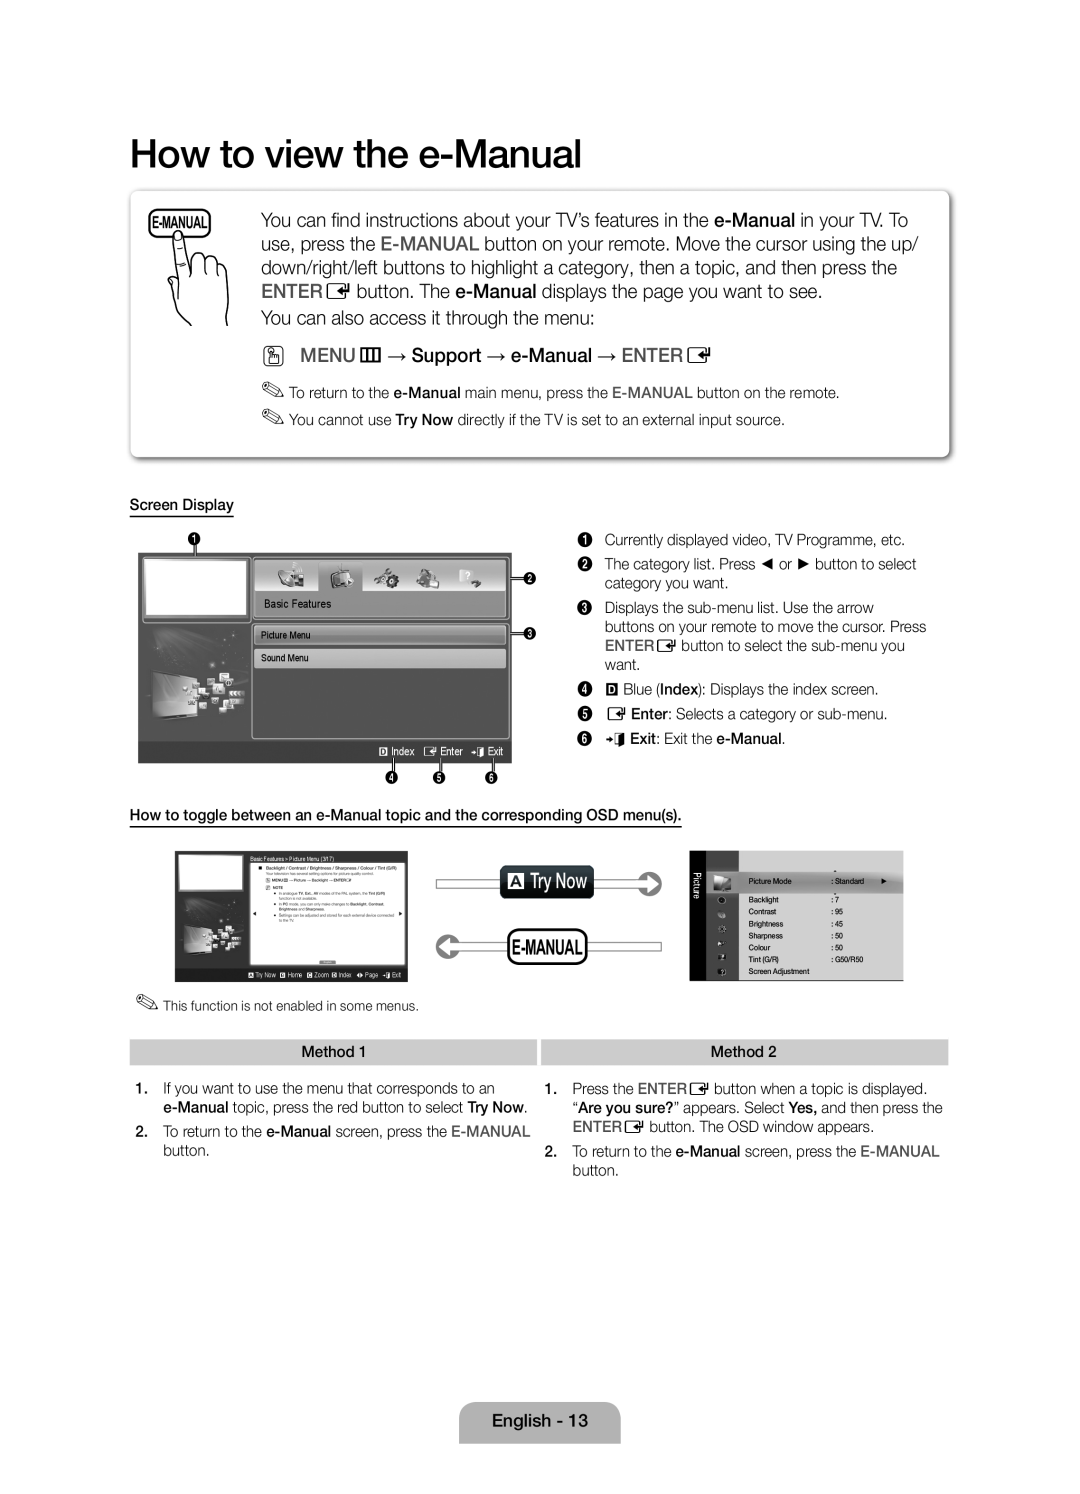 Samsung UE37D5000PWXXC, UE46D5000PWXZG, UE40D5000PWXXH, UE40D5000PWXXC manual How to view the e-Manual, aTry Now, E-Manual 